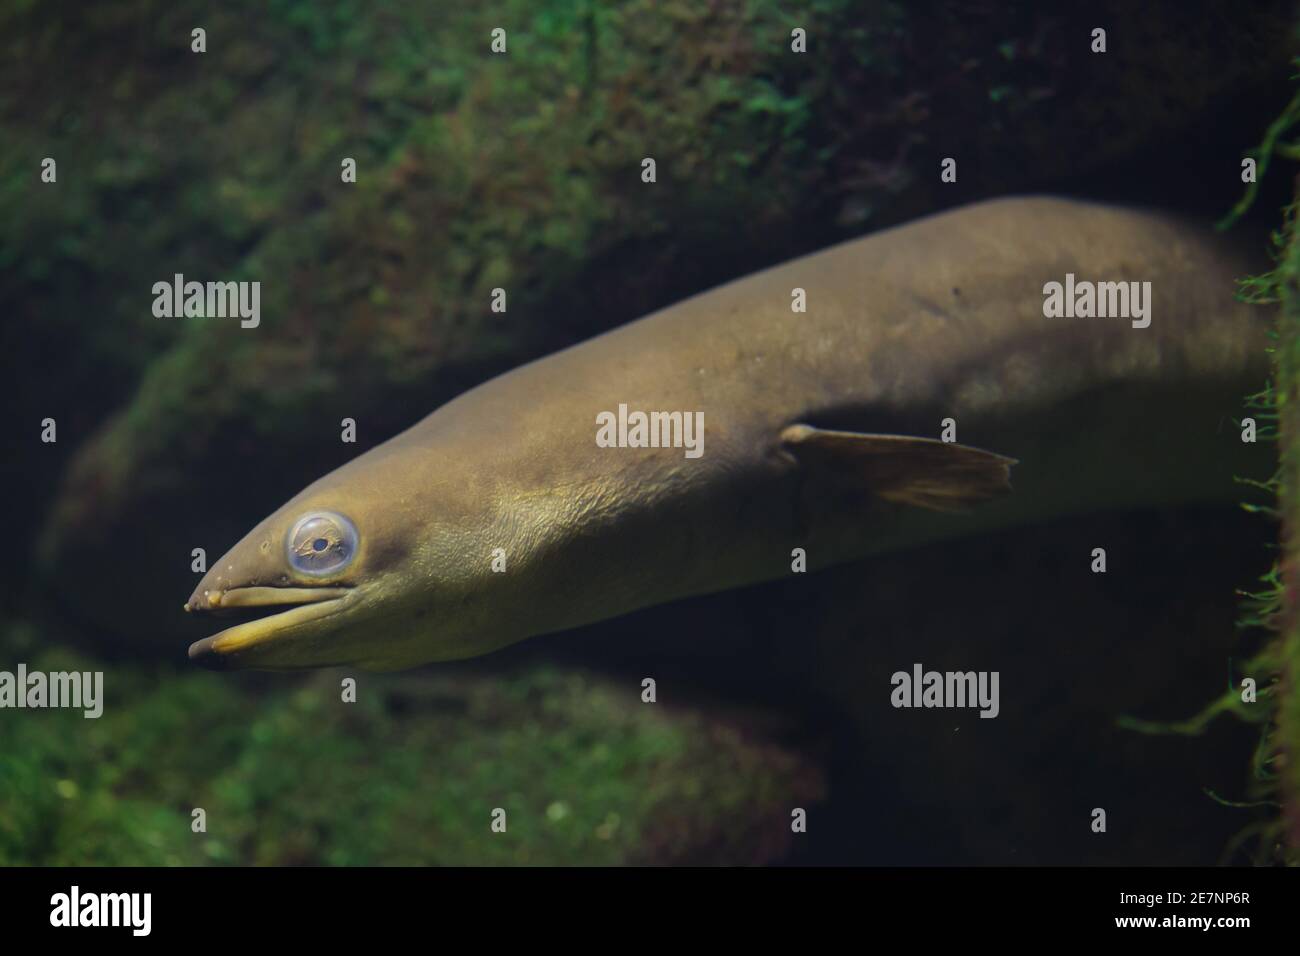 European eel (Anguilla anguilla). Freshwater snake like fish. Stock Photo